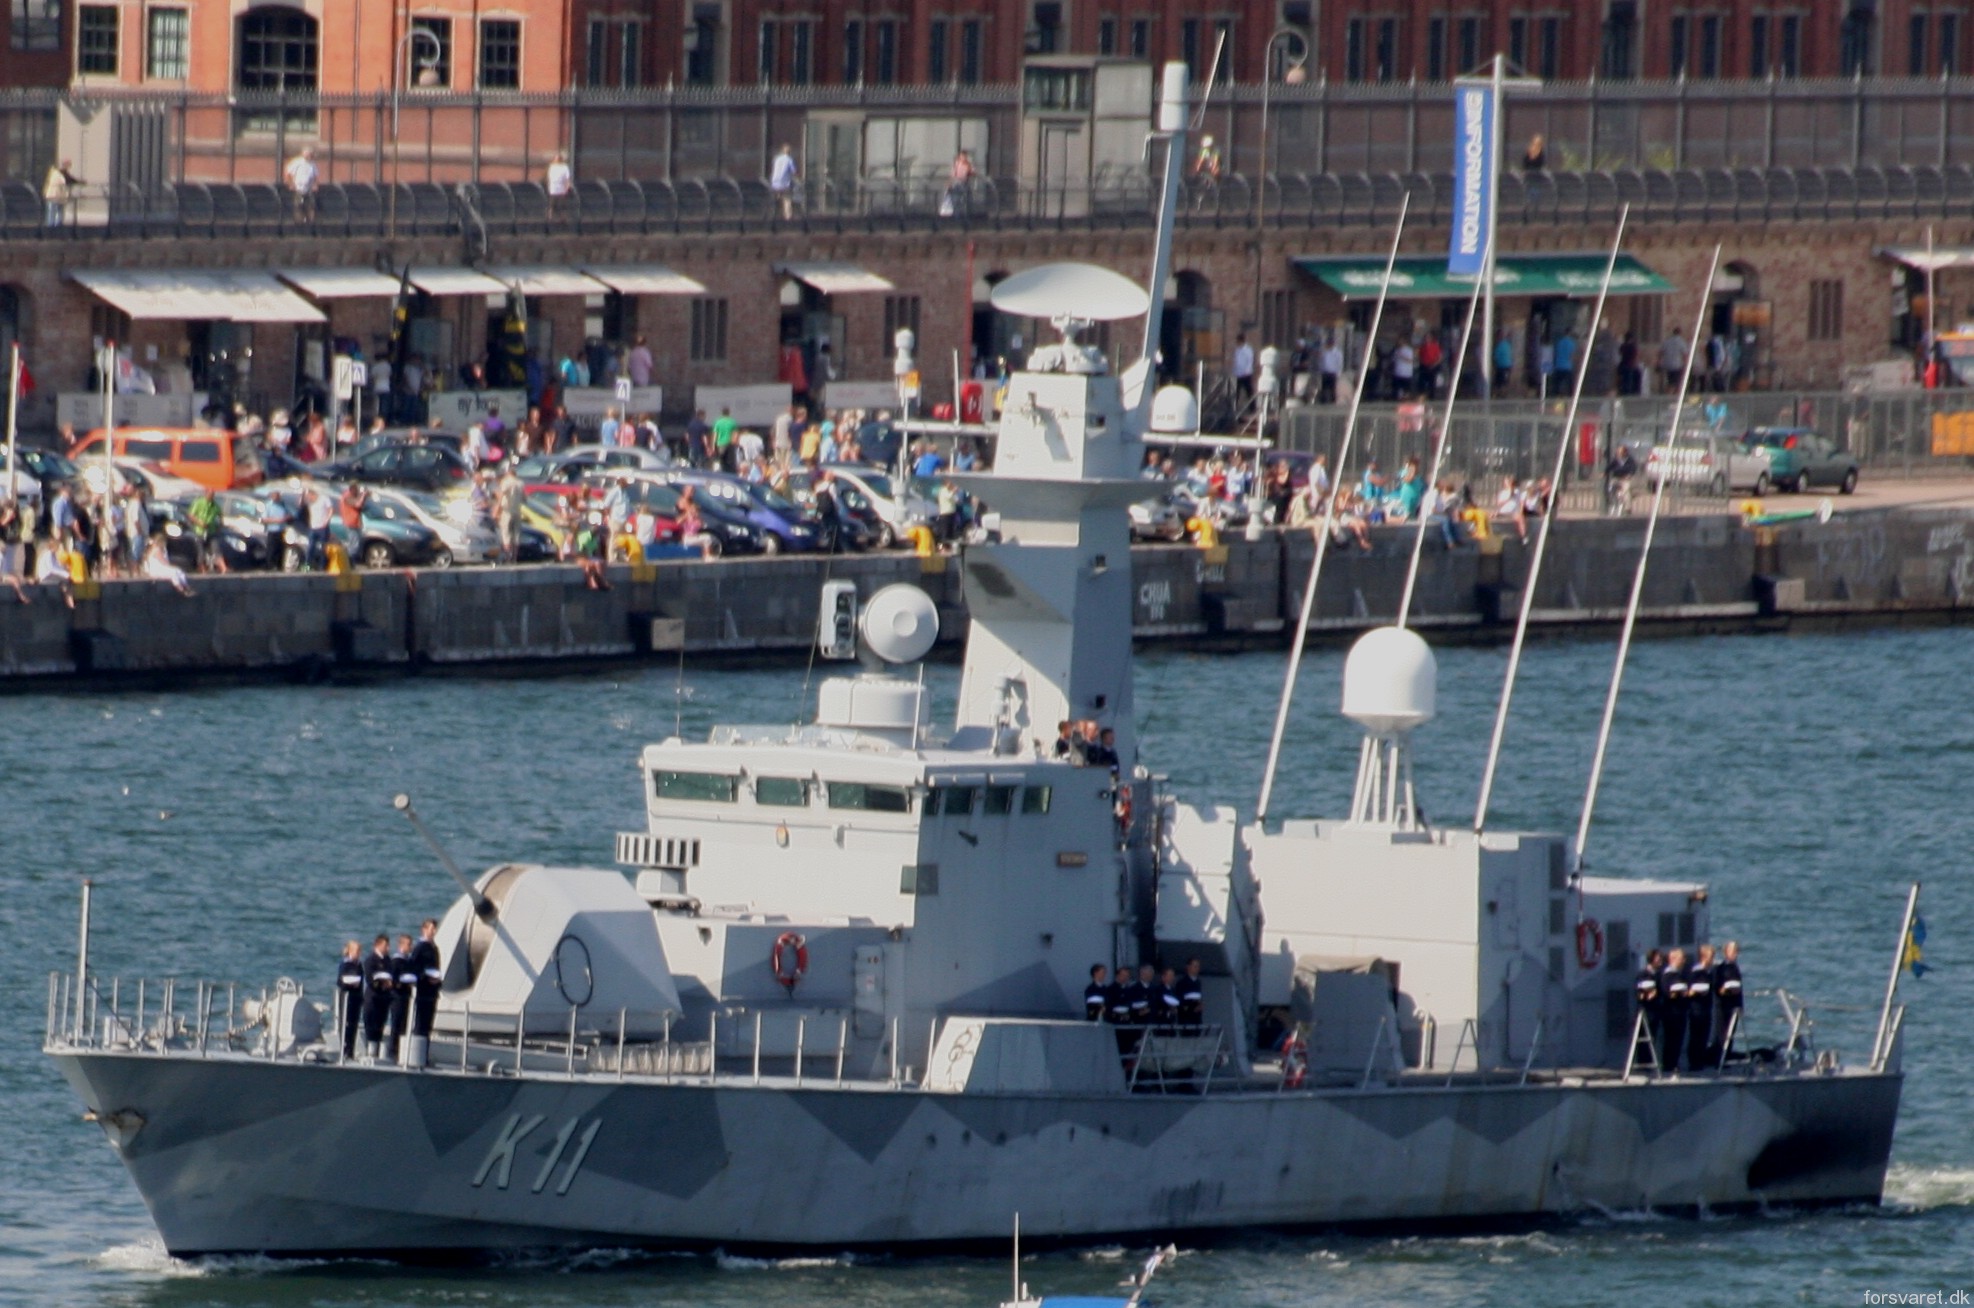 K11 P11 hswms stockholm hms class corvette patrol vessel swedish navy svenska marinen forsvarsmakten 02